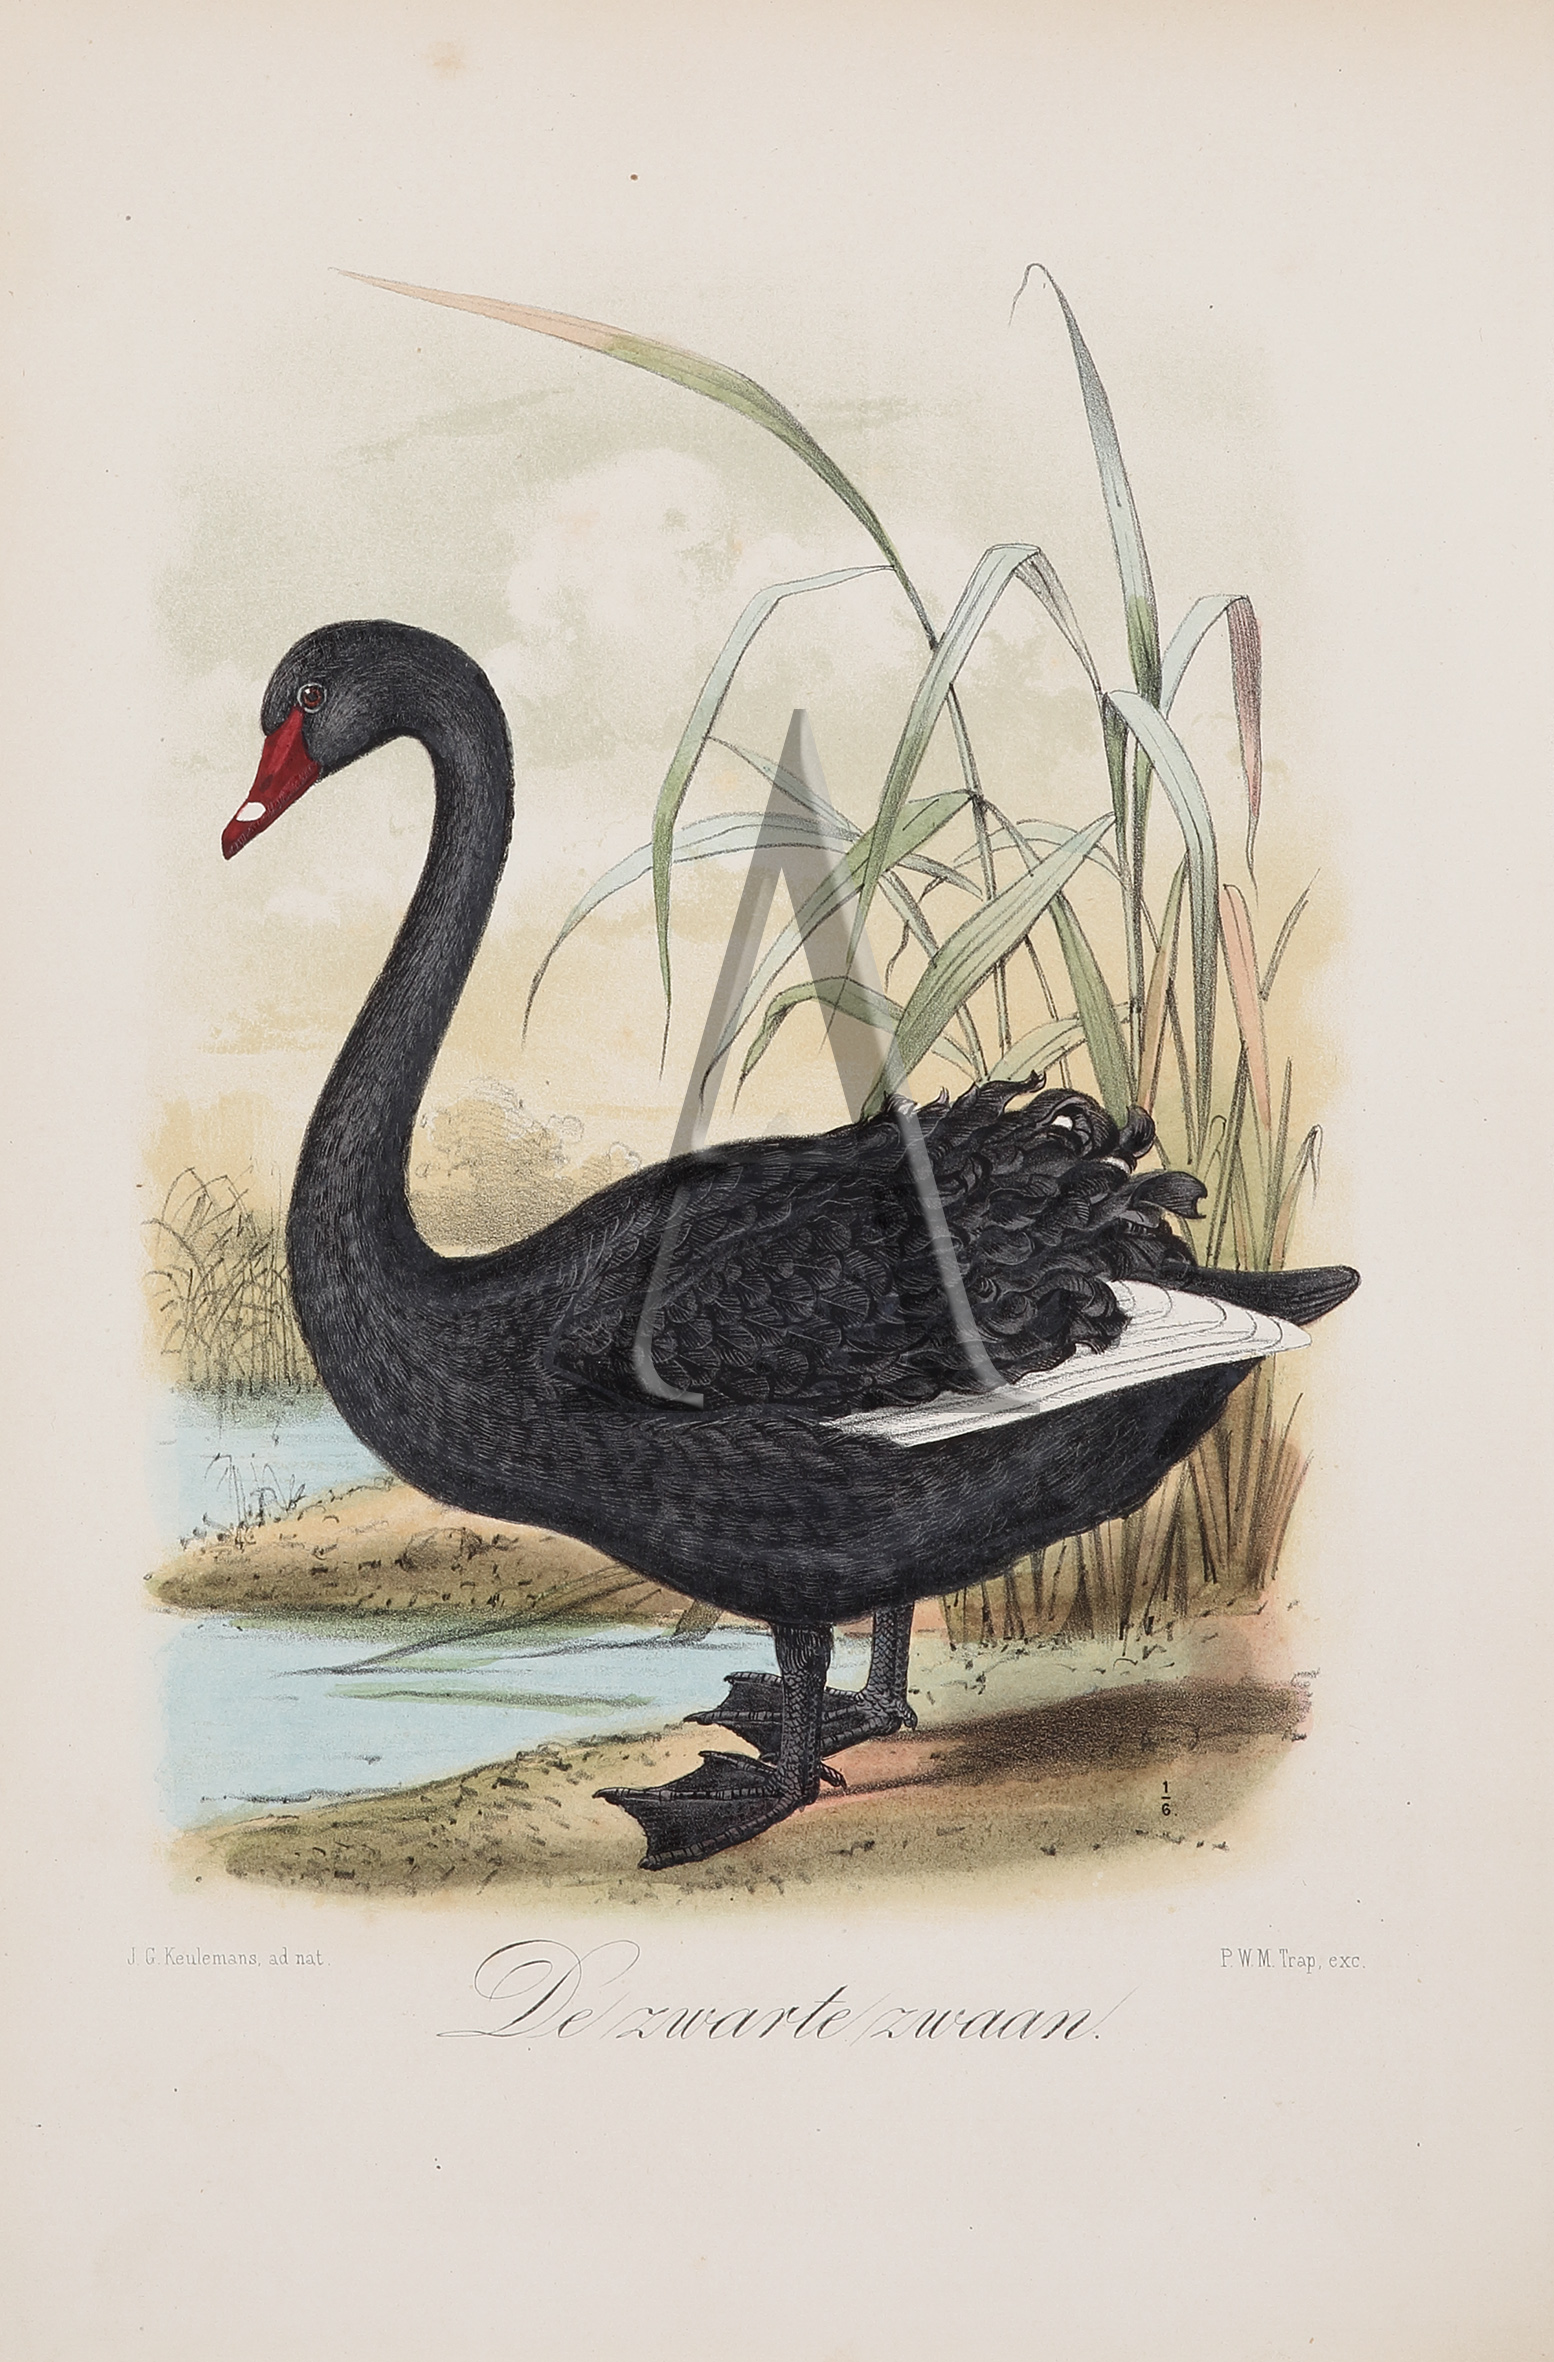 Dezwarte zwaan (Black Swan) - Antique Print from 1869